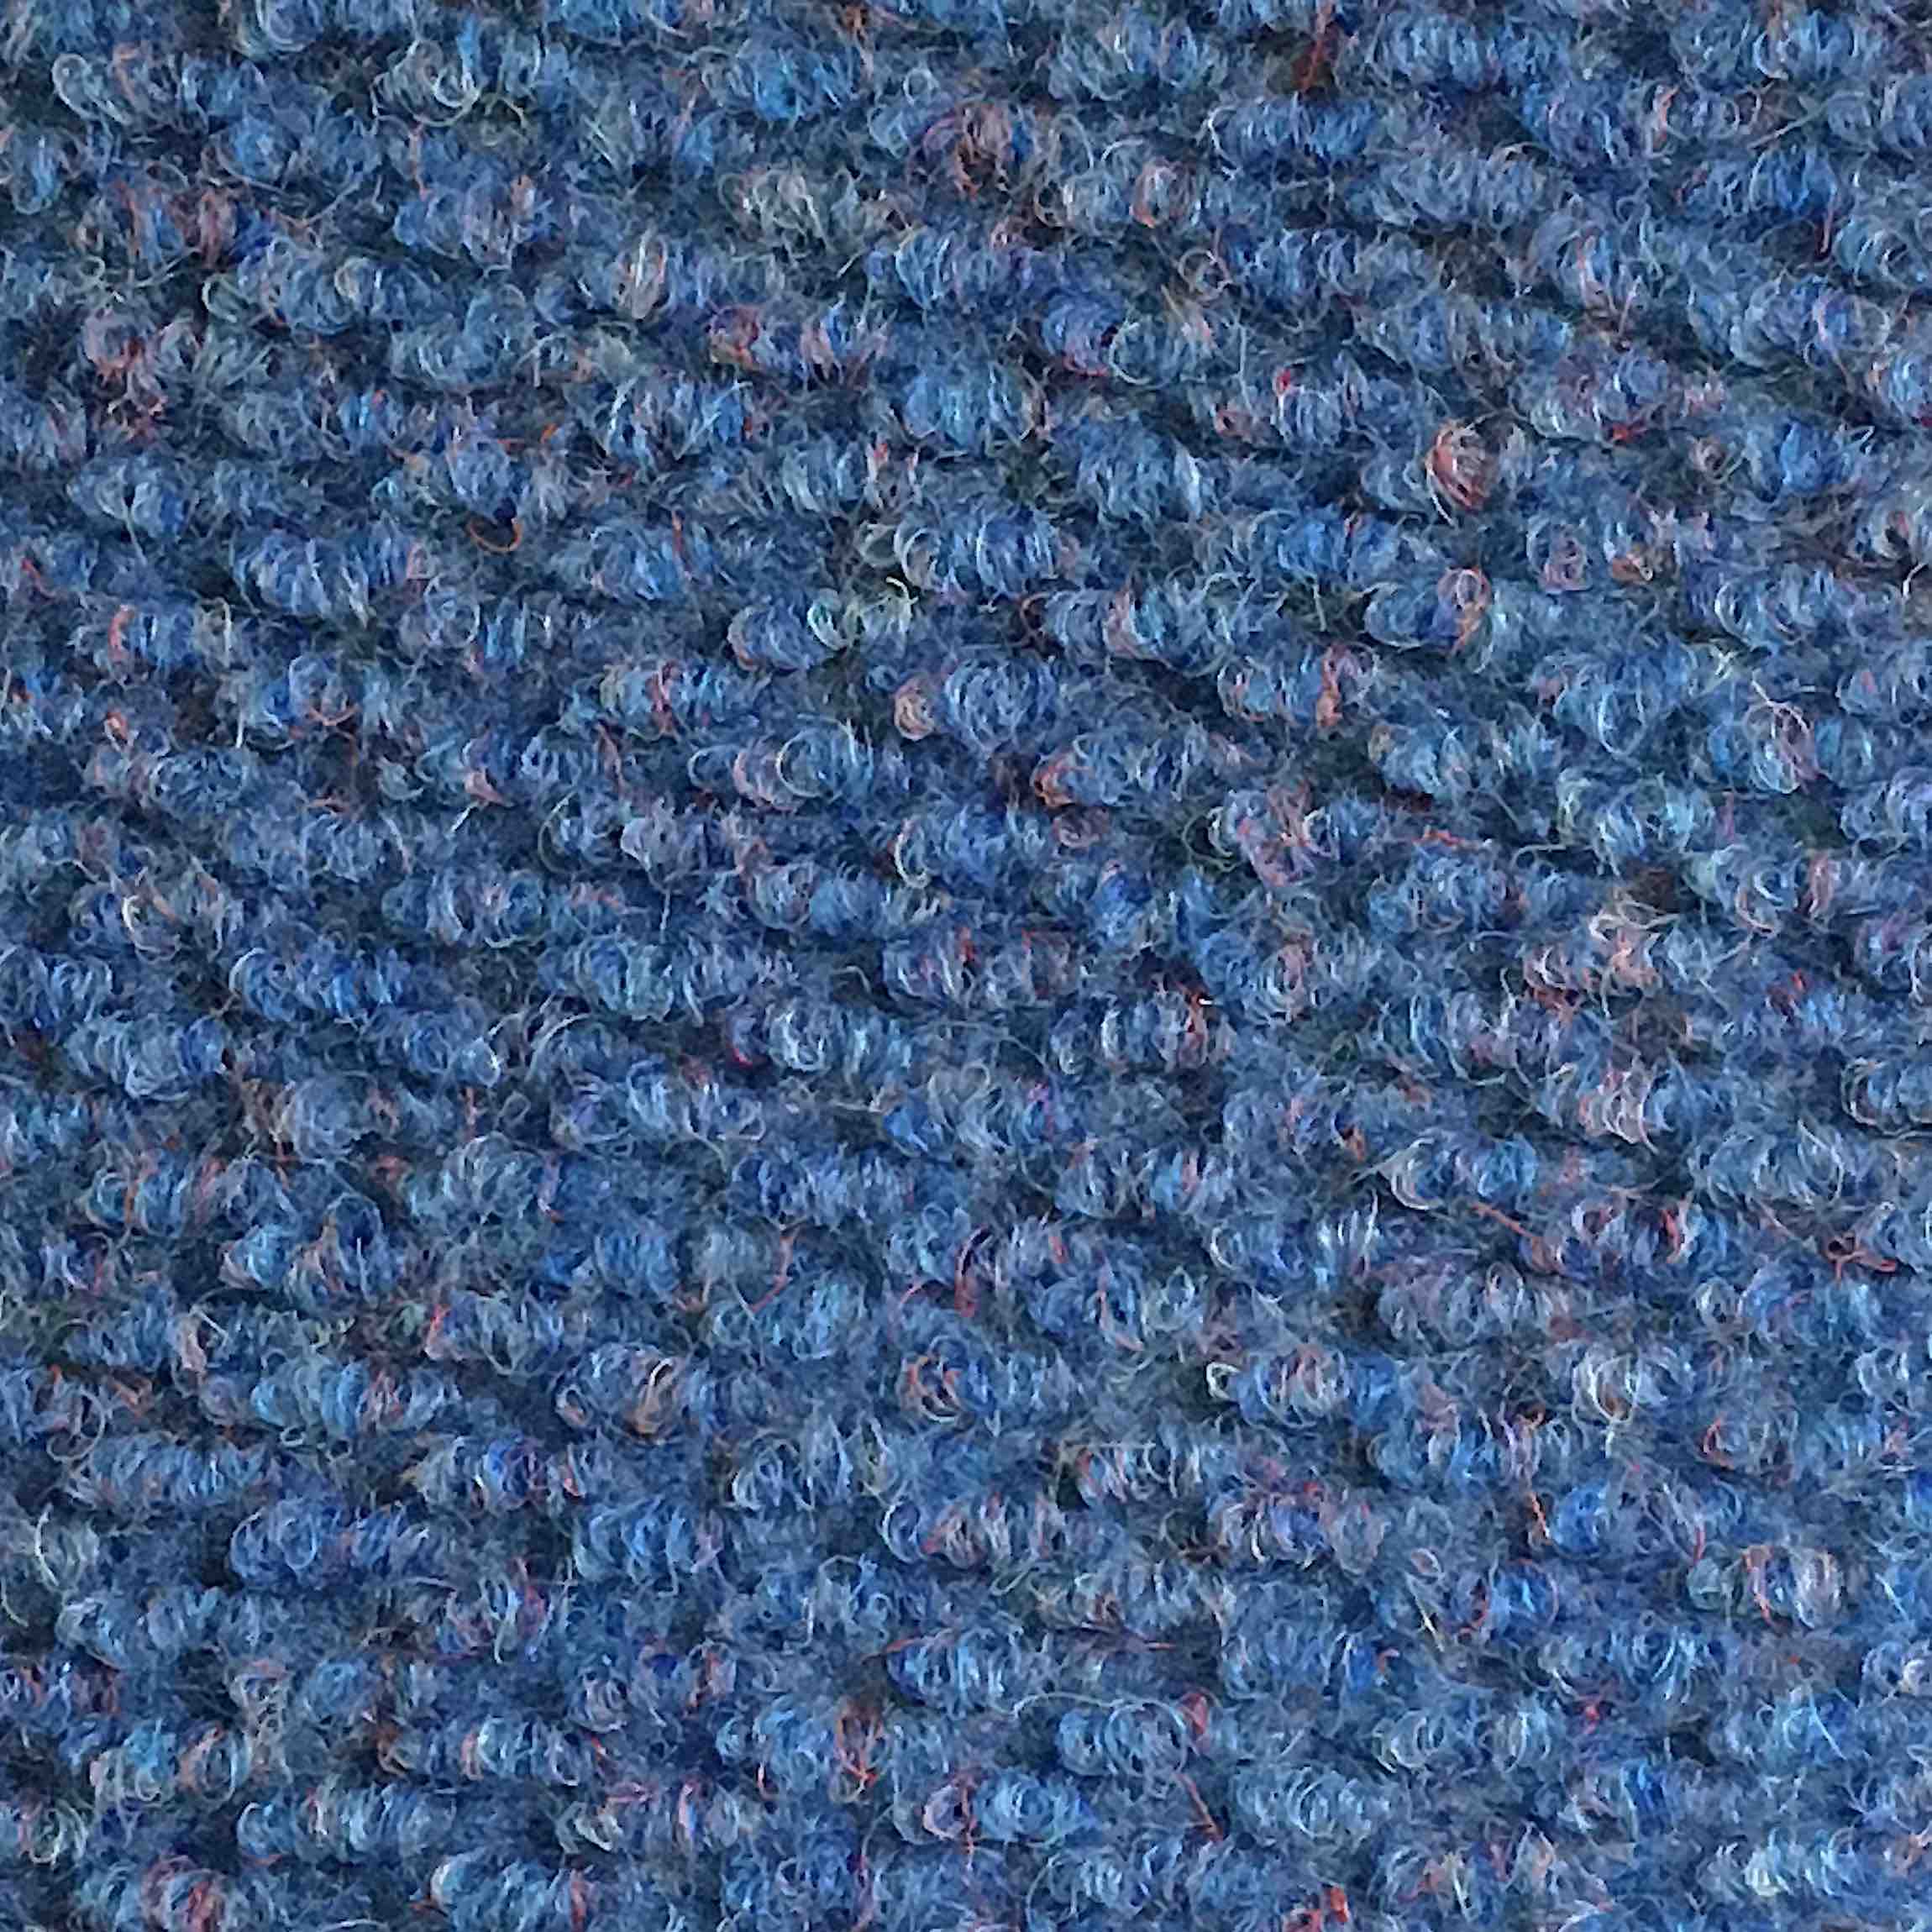 Heckmondwike Hobnail Carpet Tile